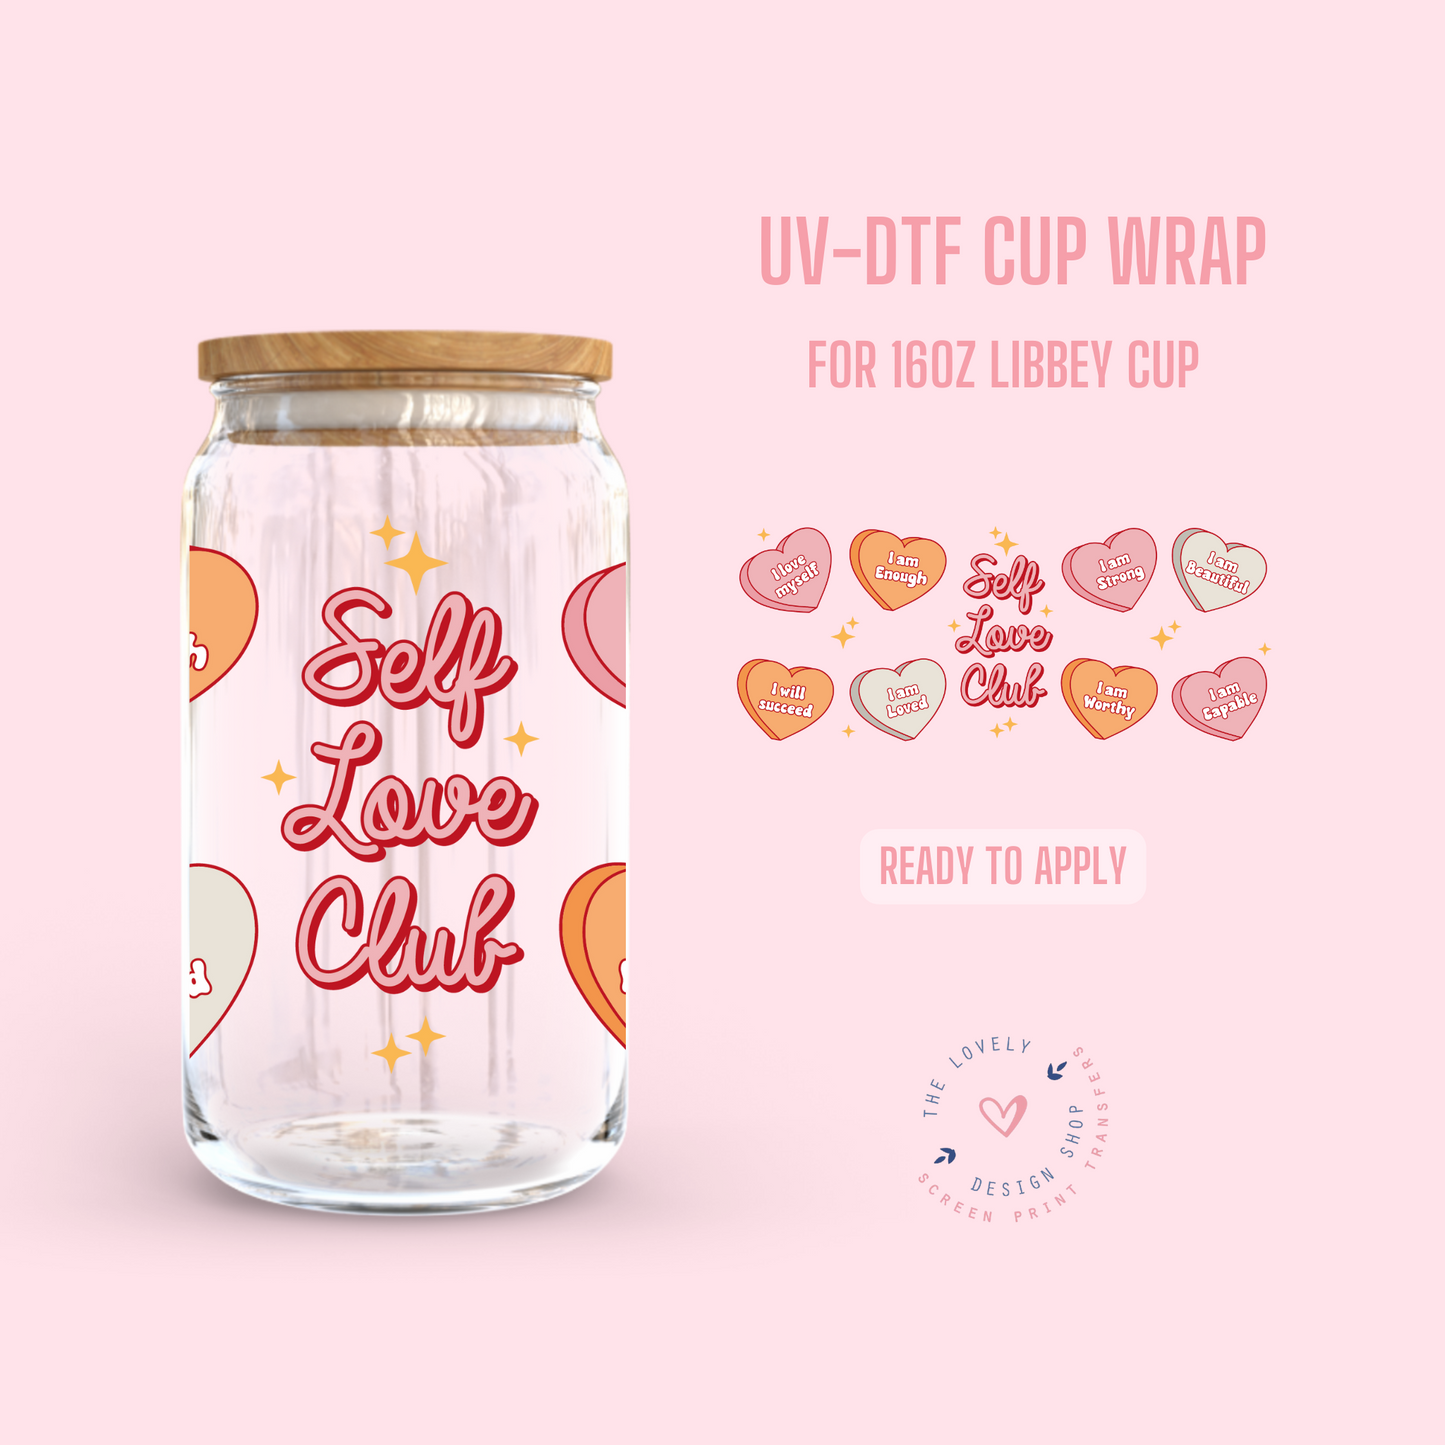 Self Love Club - UV DTF 16 oz Libbey Cup Wrap (Ready to Ship)